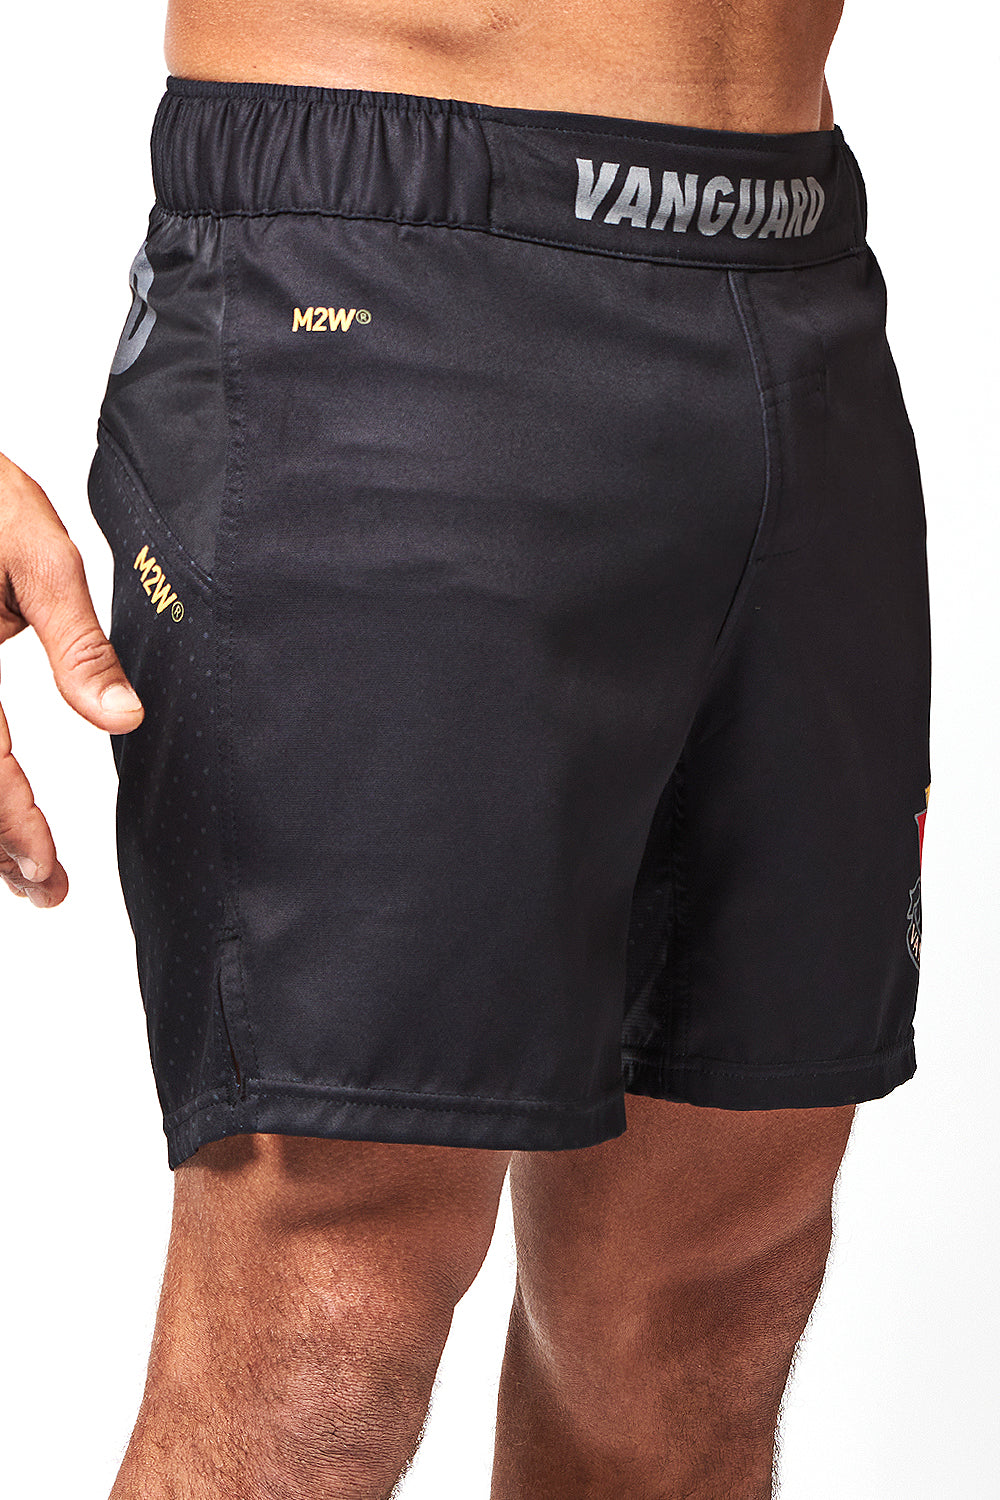 COMPETITORE Shorts - BLACK